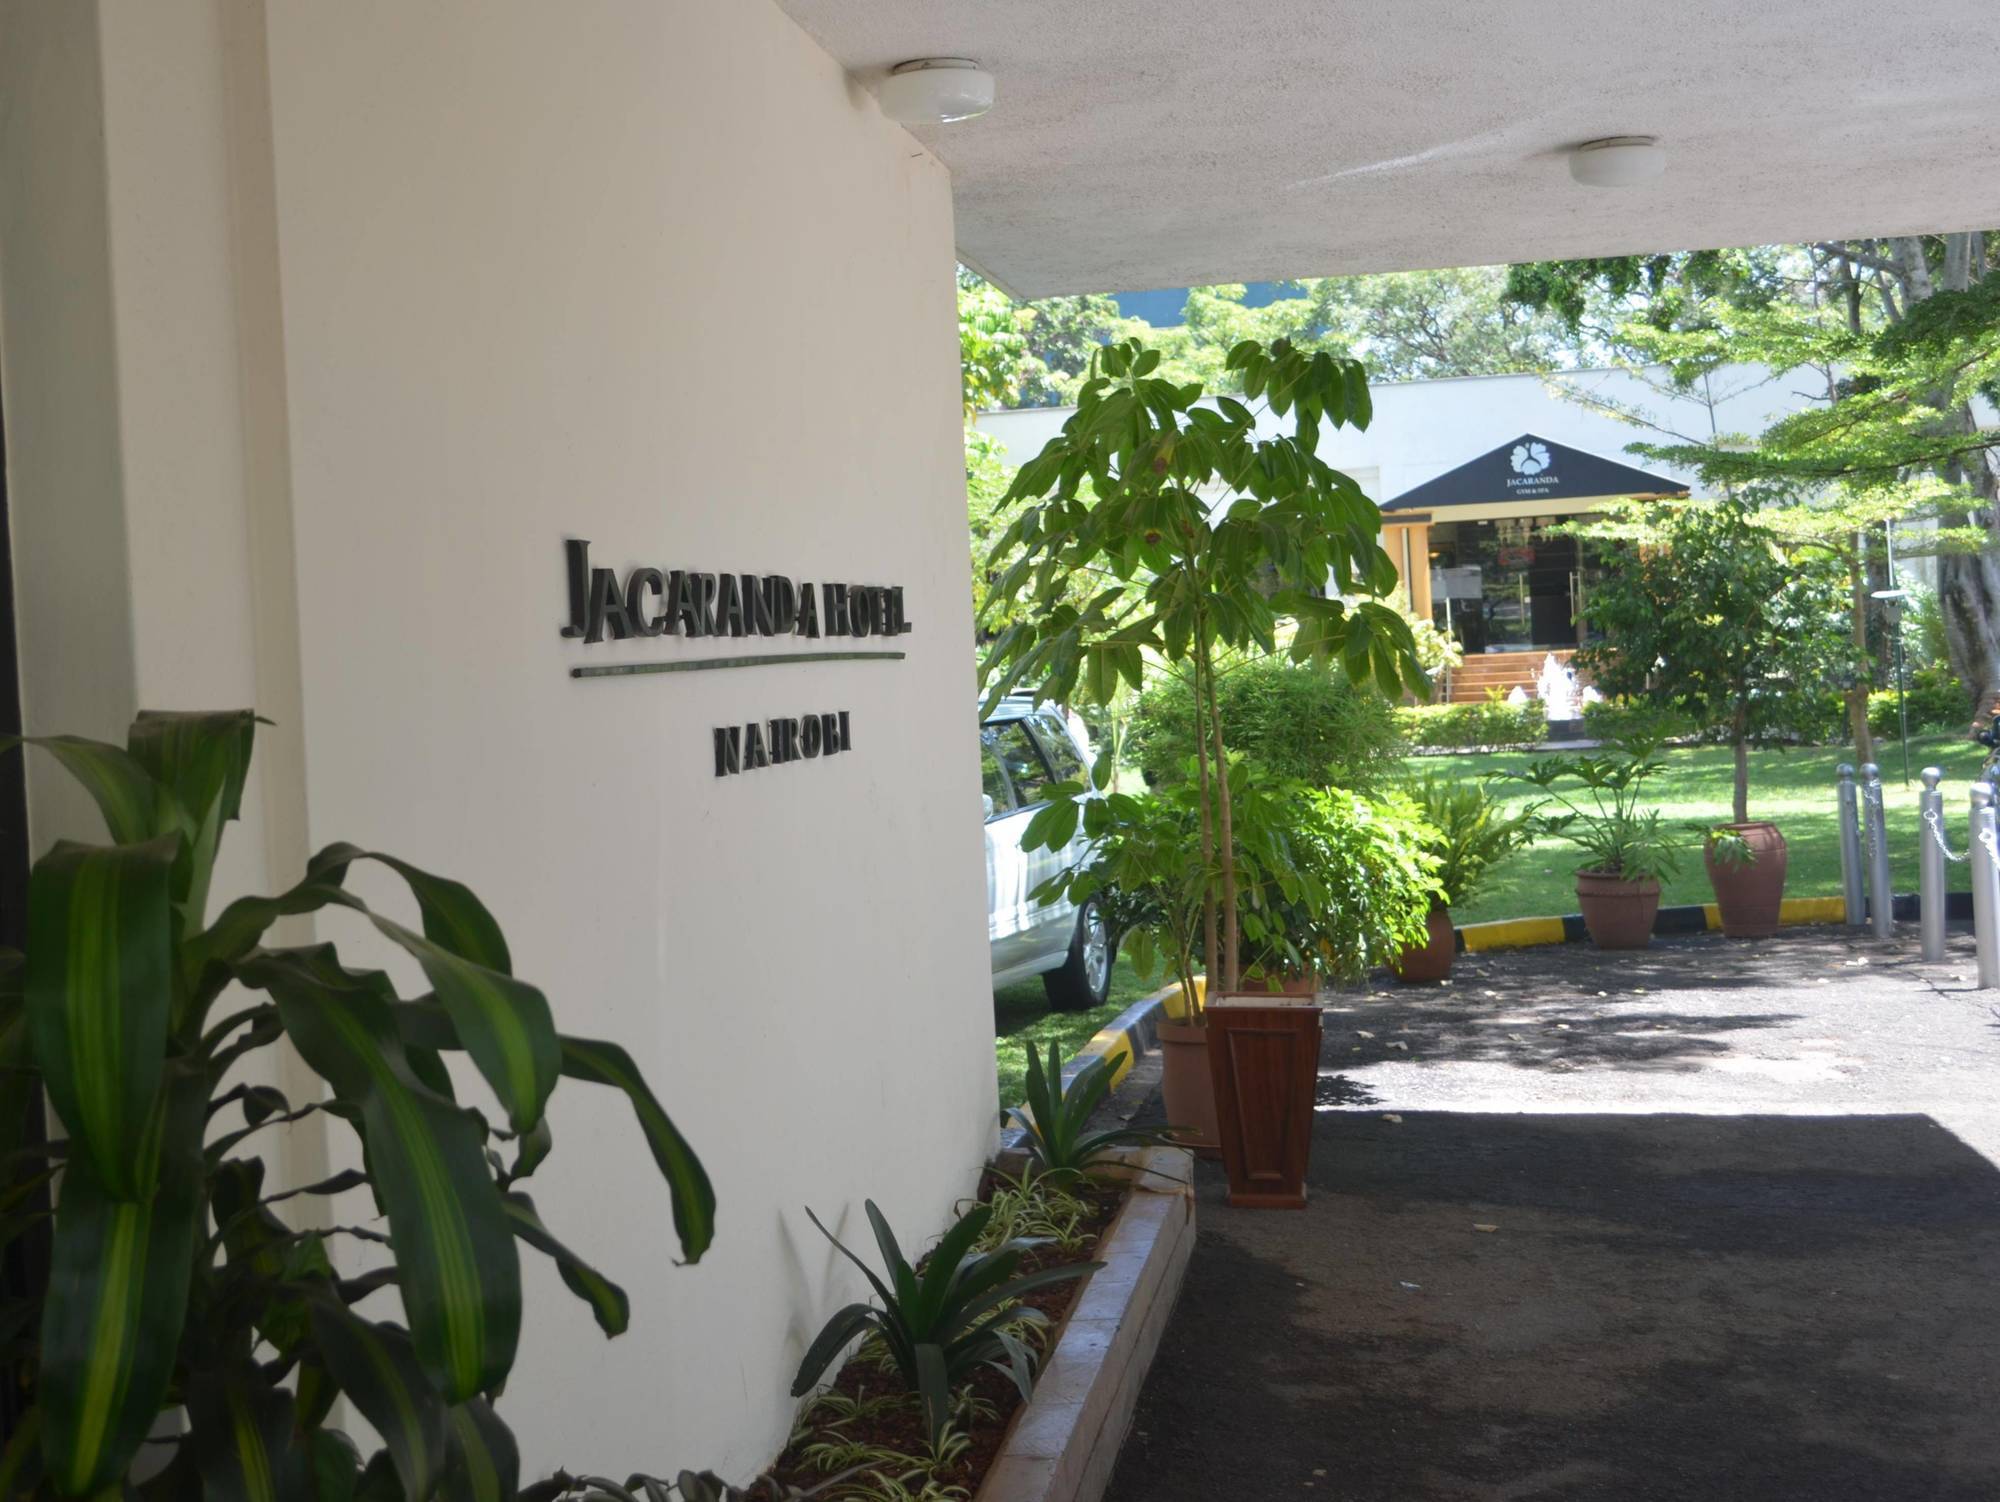 Jacaranda Hotel Nairobi Exterior foto